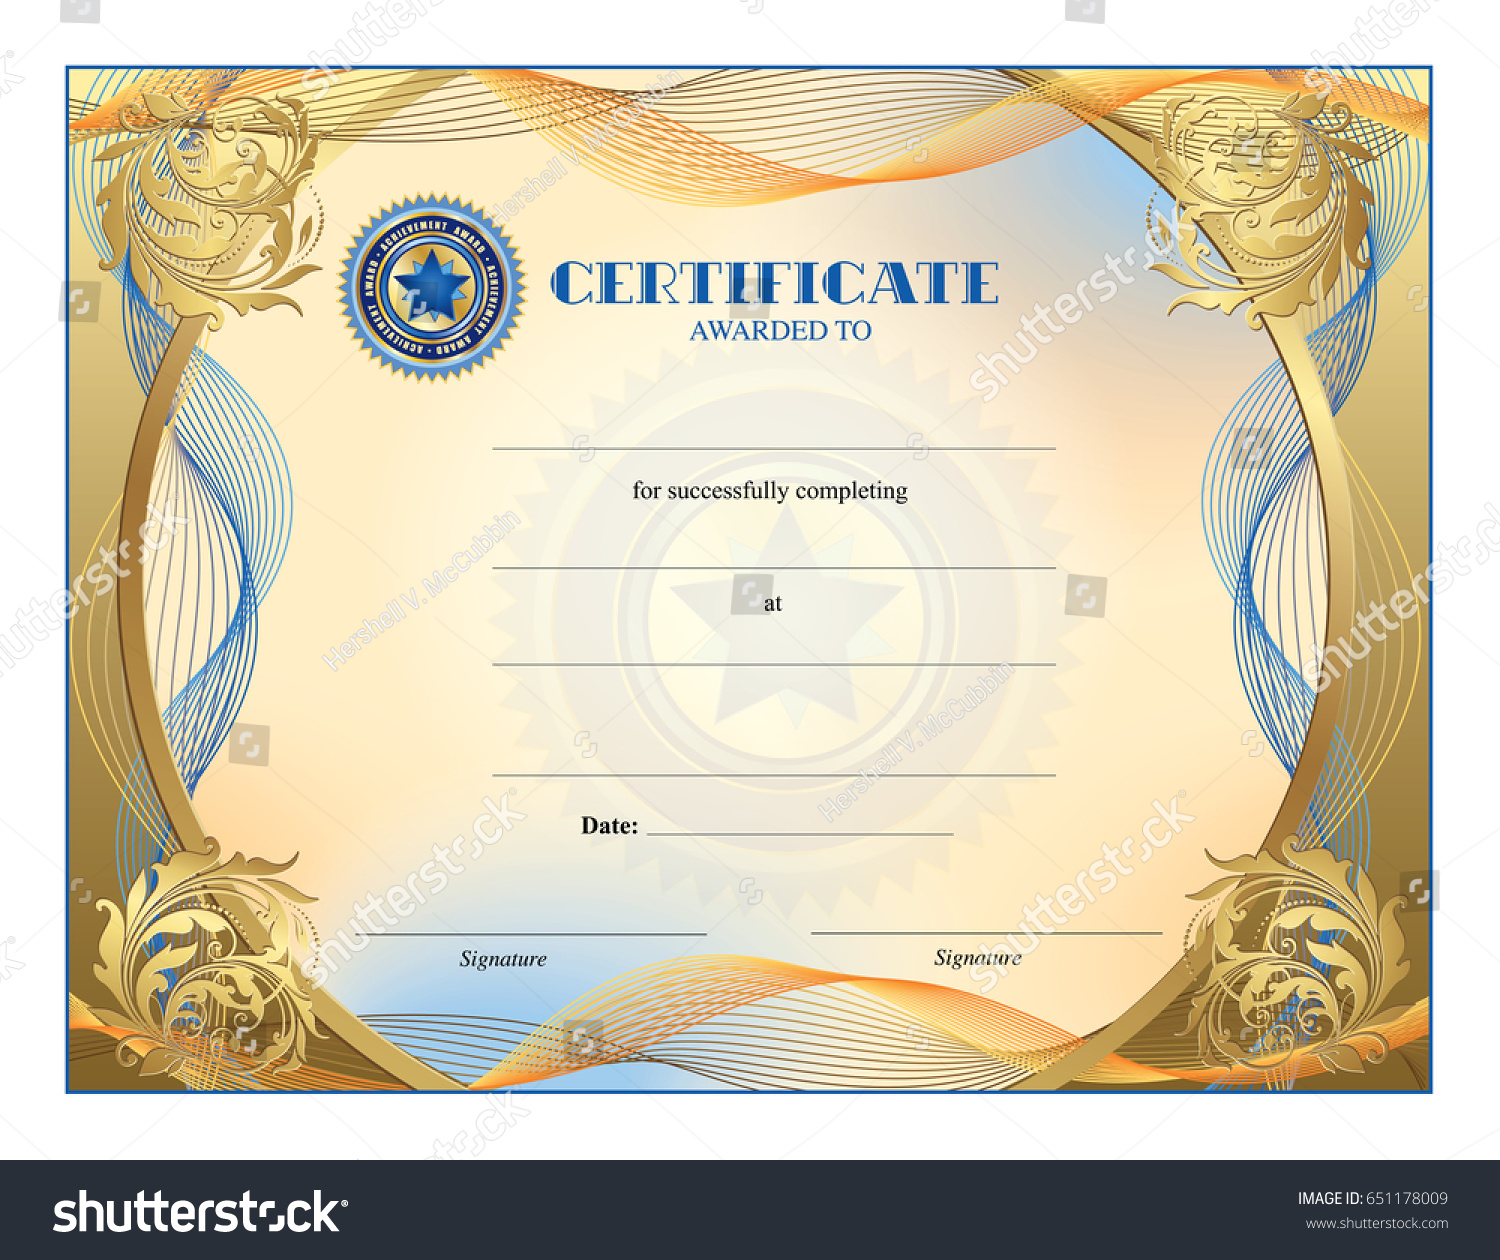 Certificate Blank Template Award Achievement Graduation: Stock